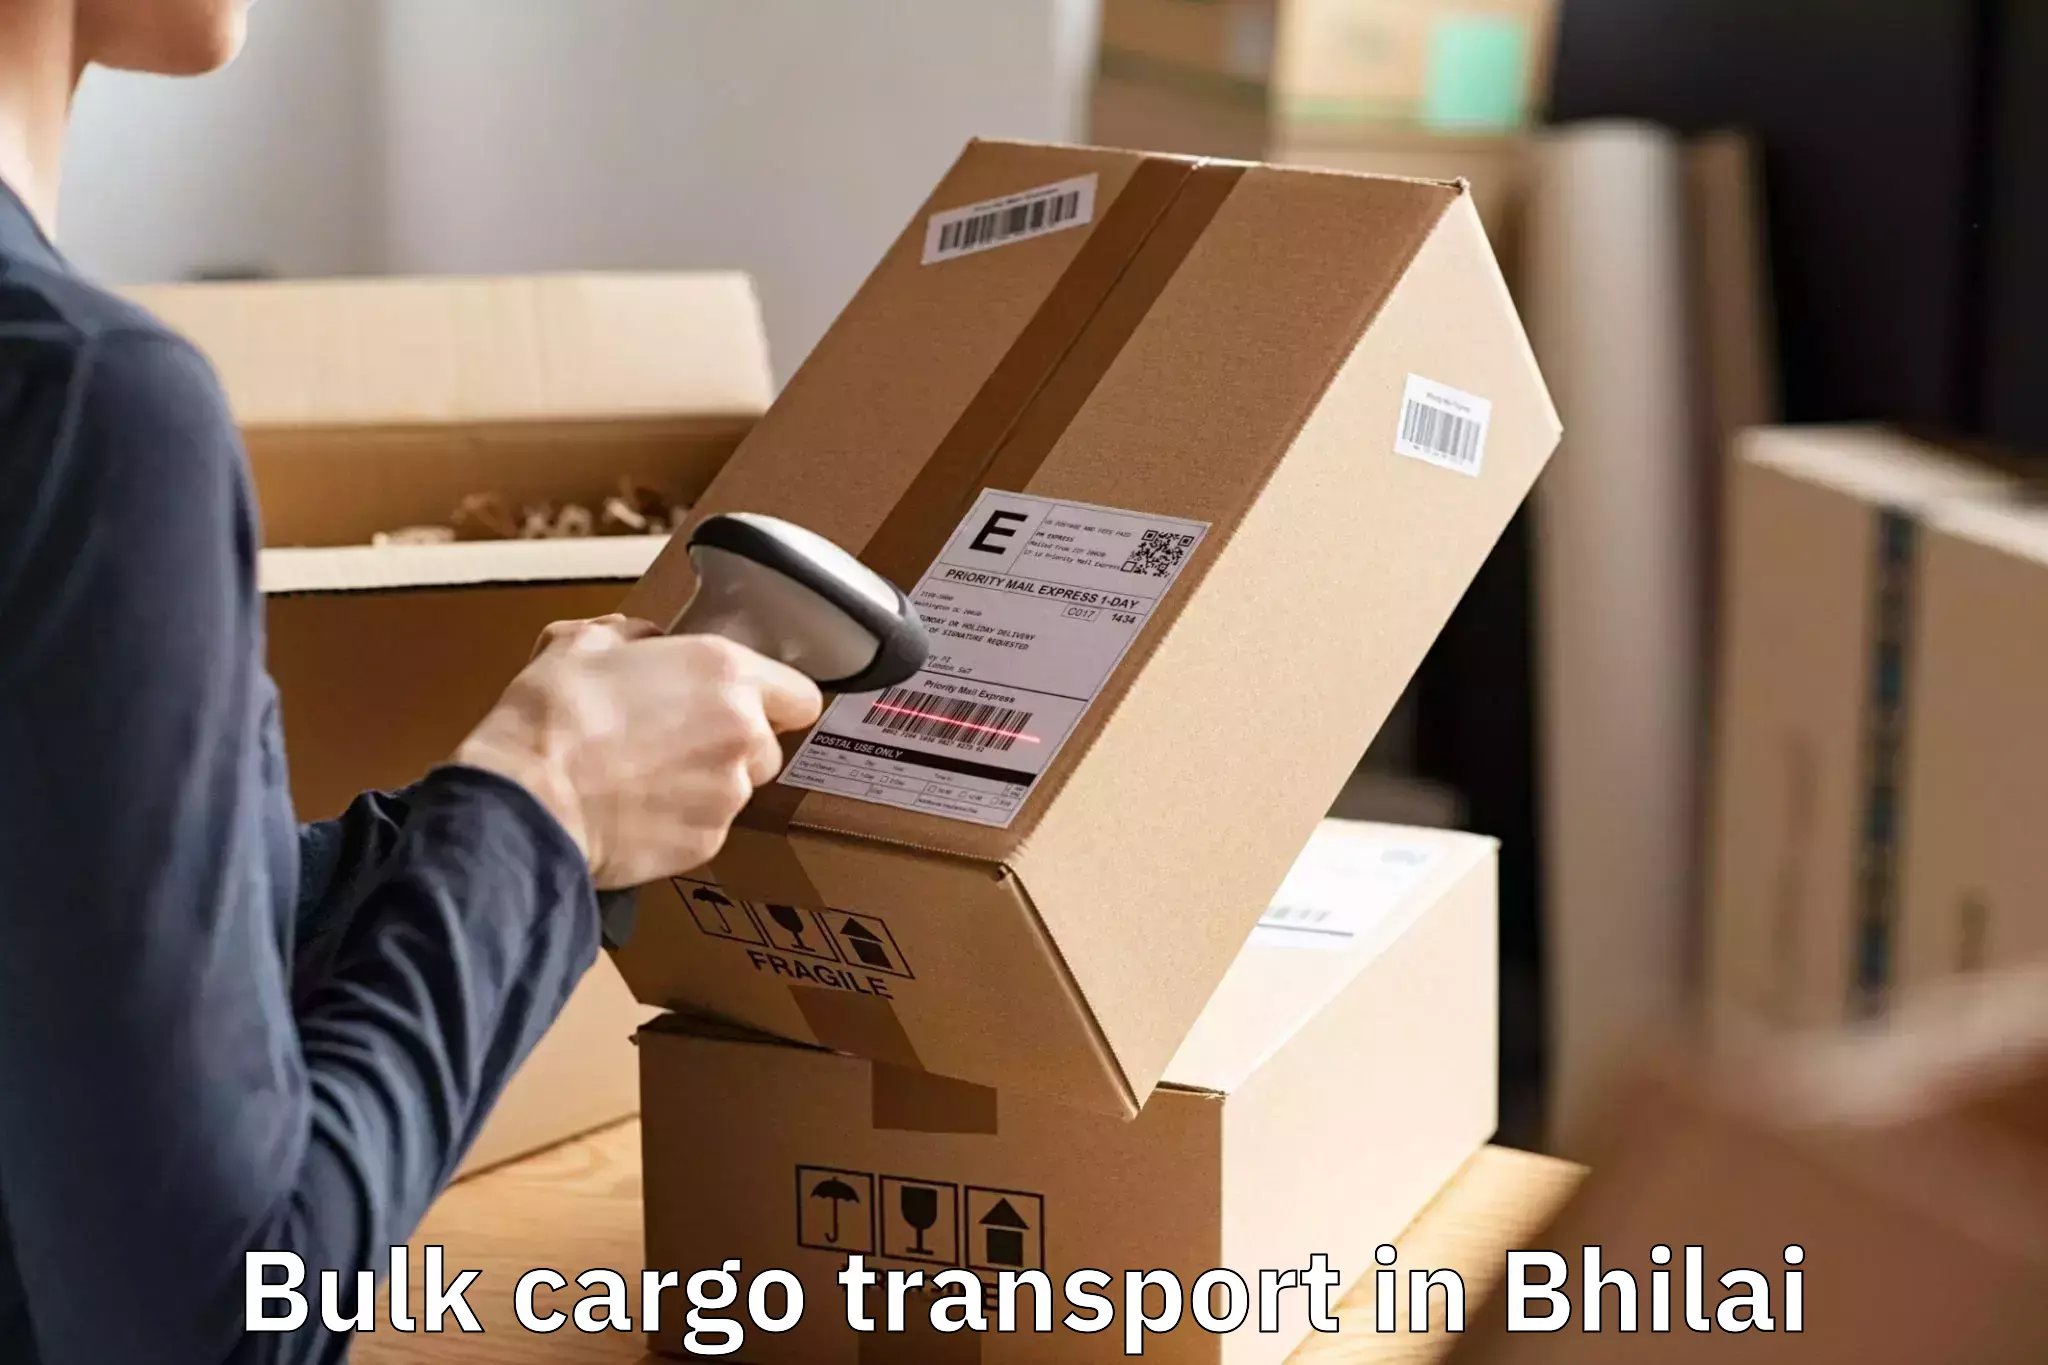 Affordable Bulk Cargo Transport in Bhilai, Chhattisgarh (CG)